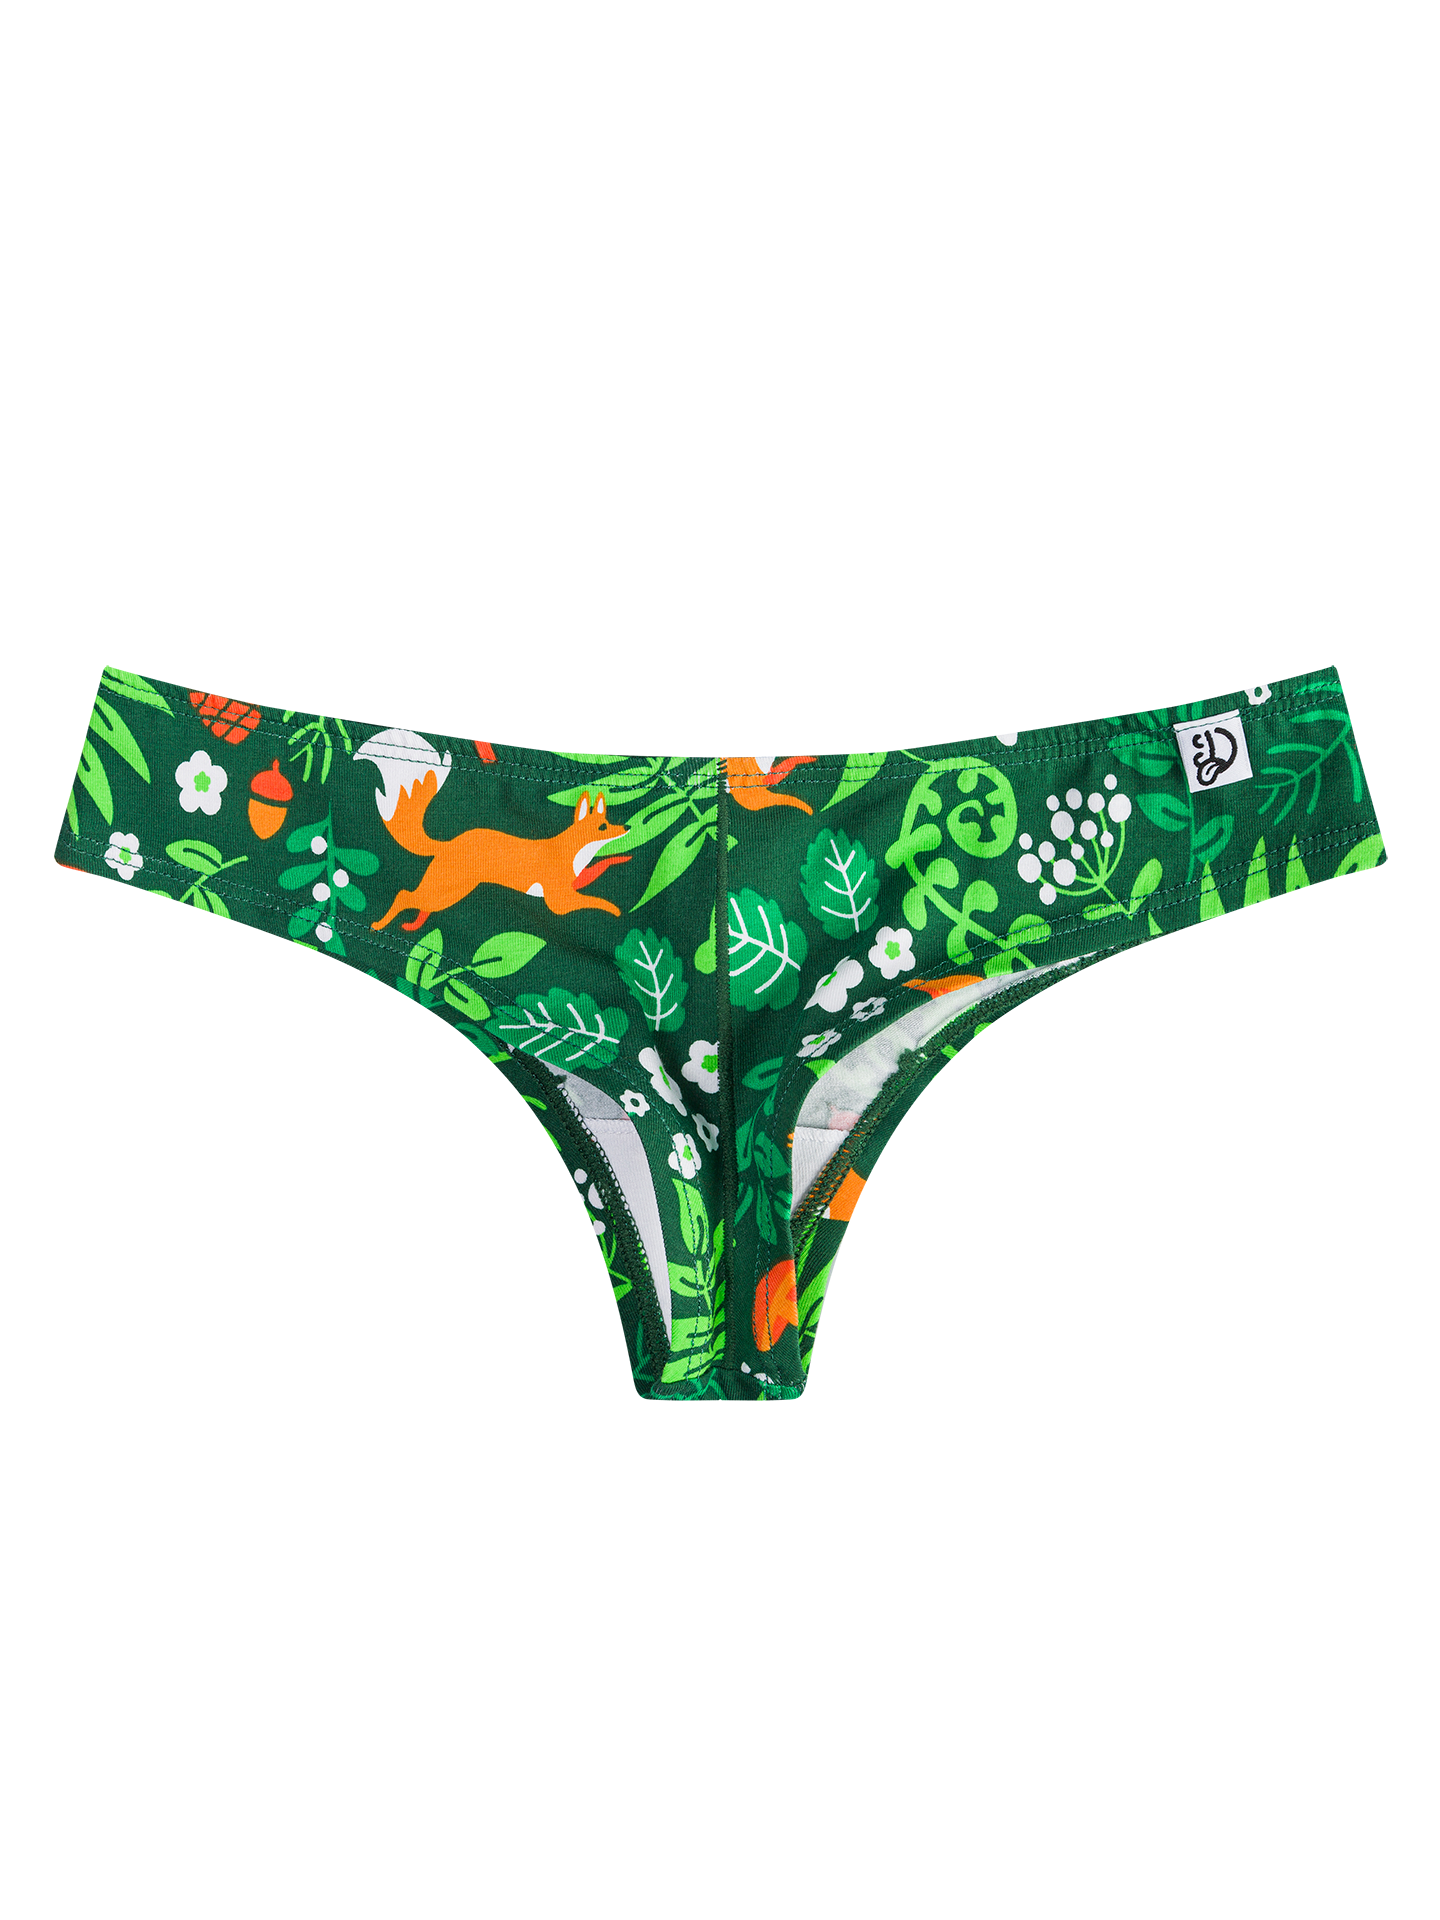 Women's Brazilian Panties Forest Animals